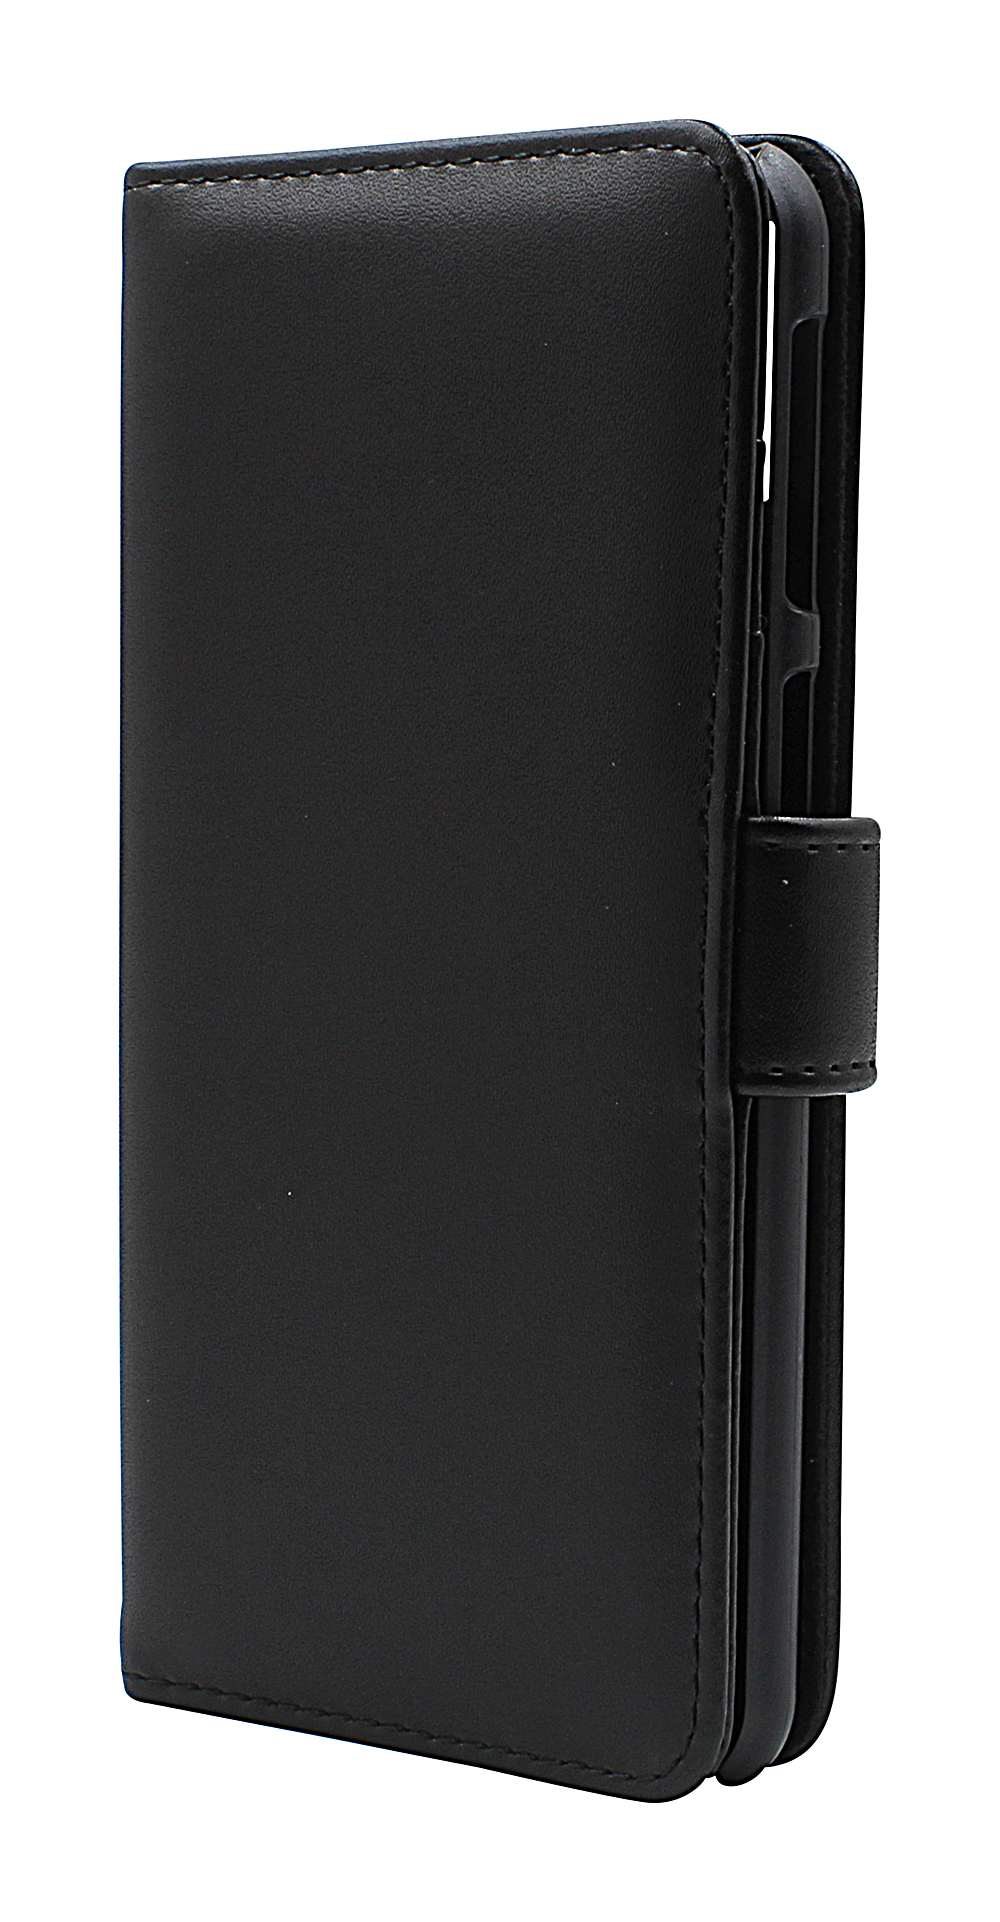 Skimblocker Lommebok-etui Samsung Galaxy M20 (M205F)